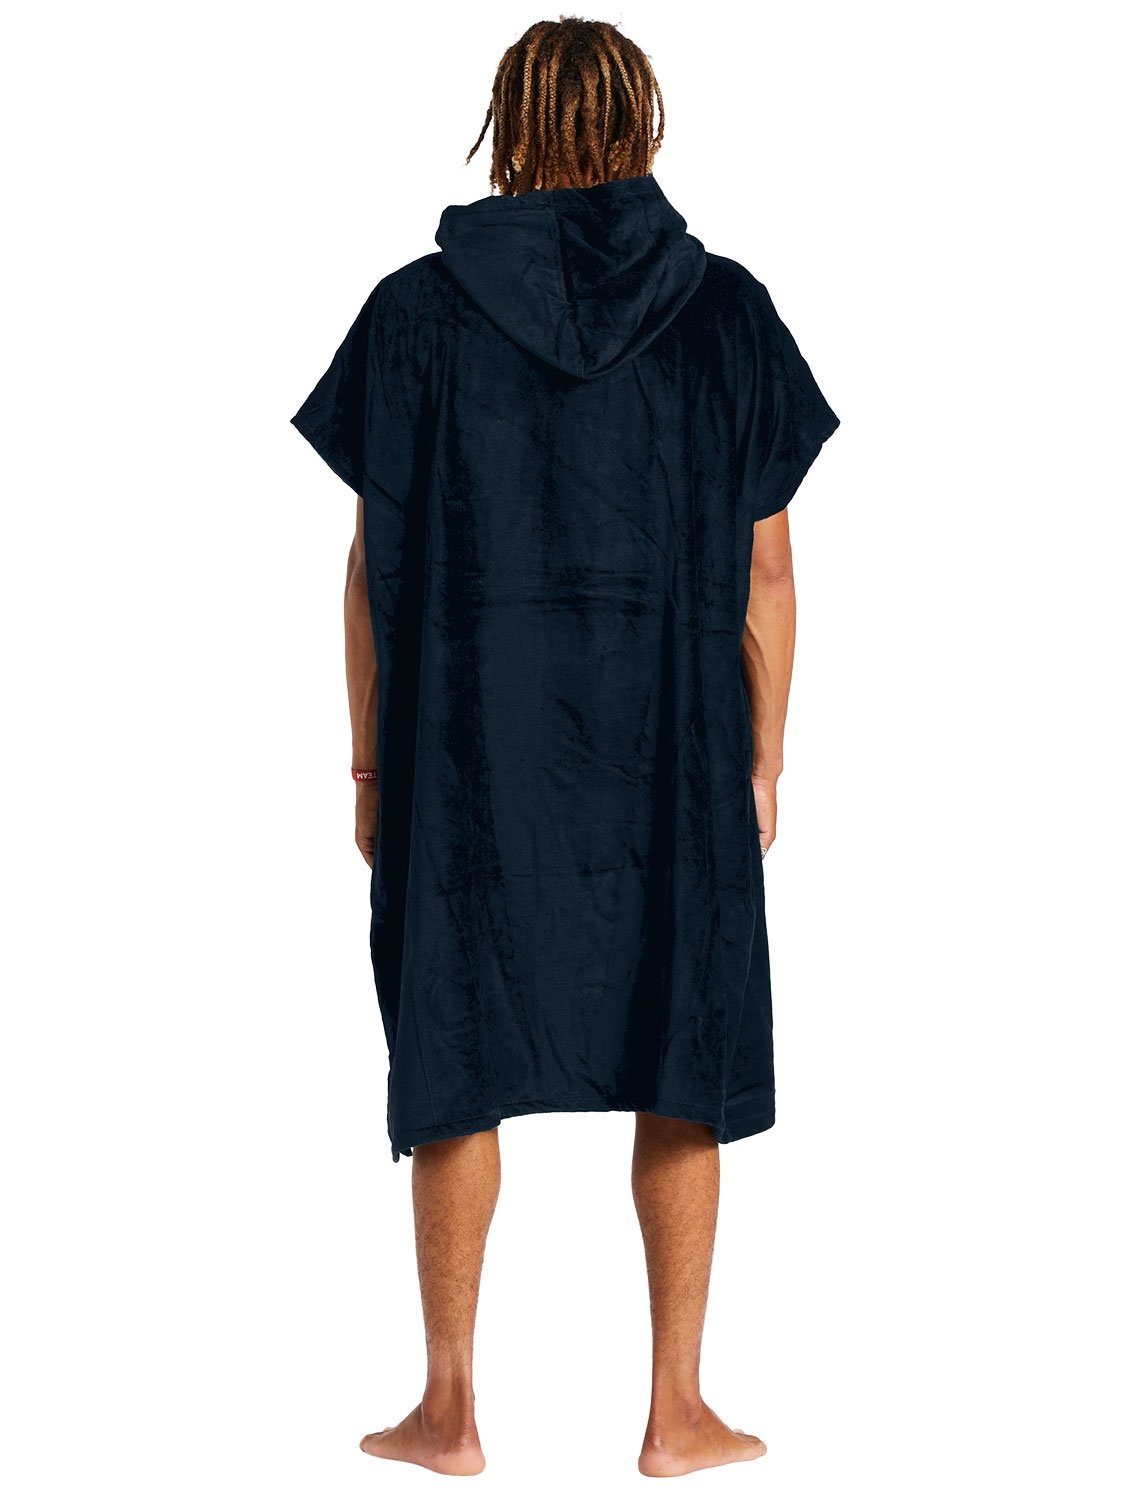 Billabong Men's All Day Hooded Towel